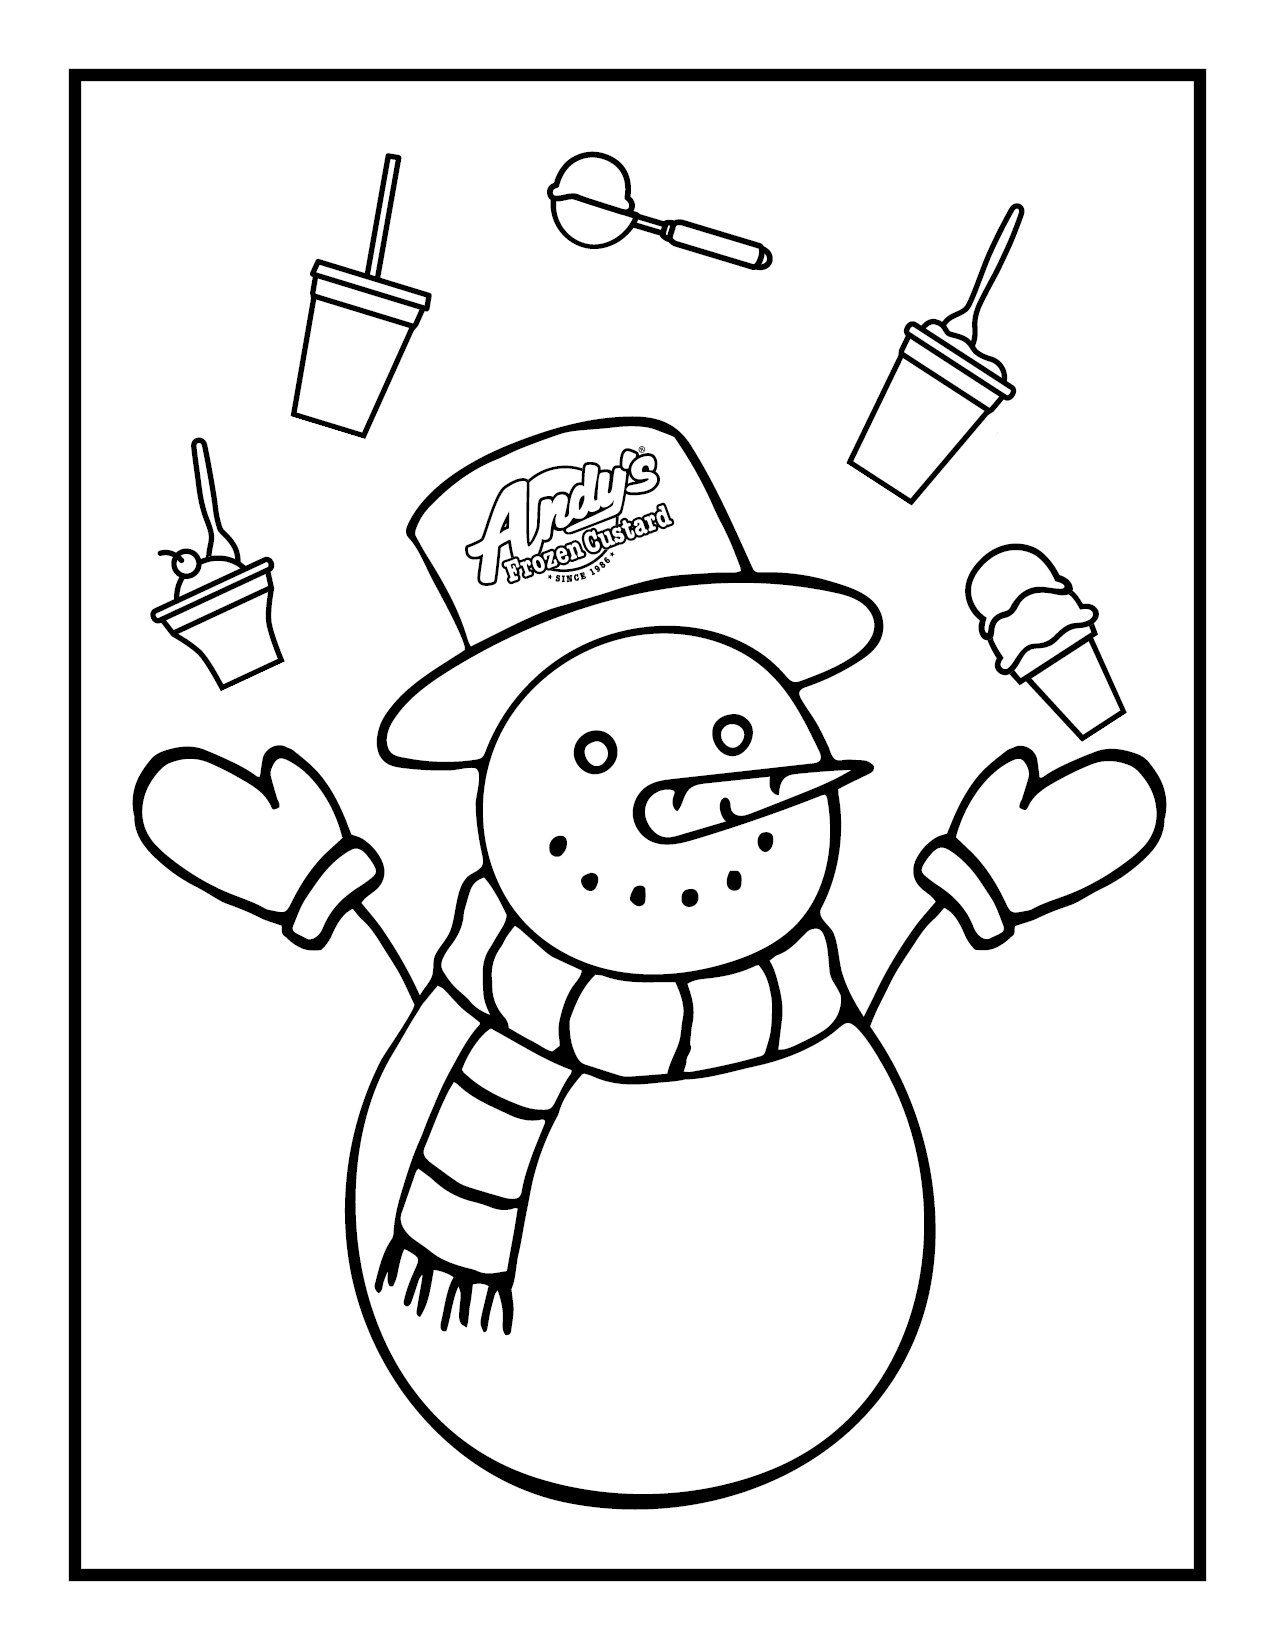 Christmas Coloring Page_Snowman Juggle.jpg